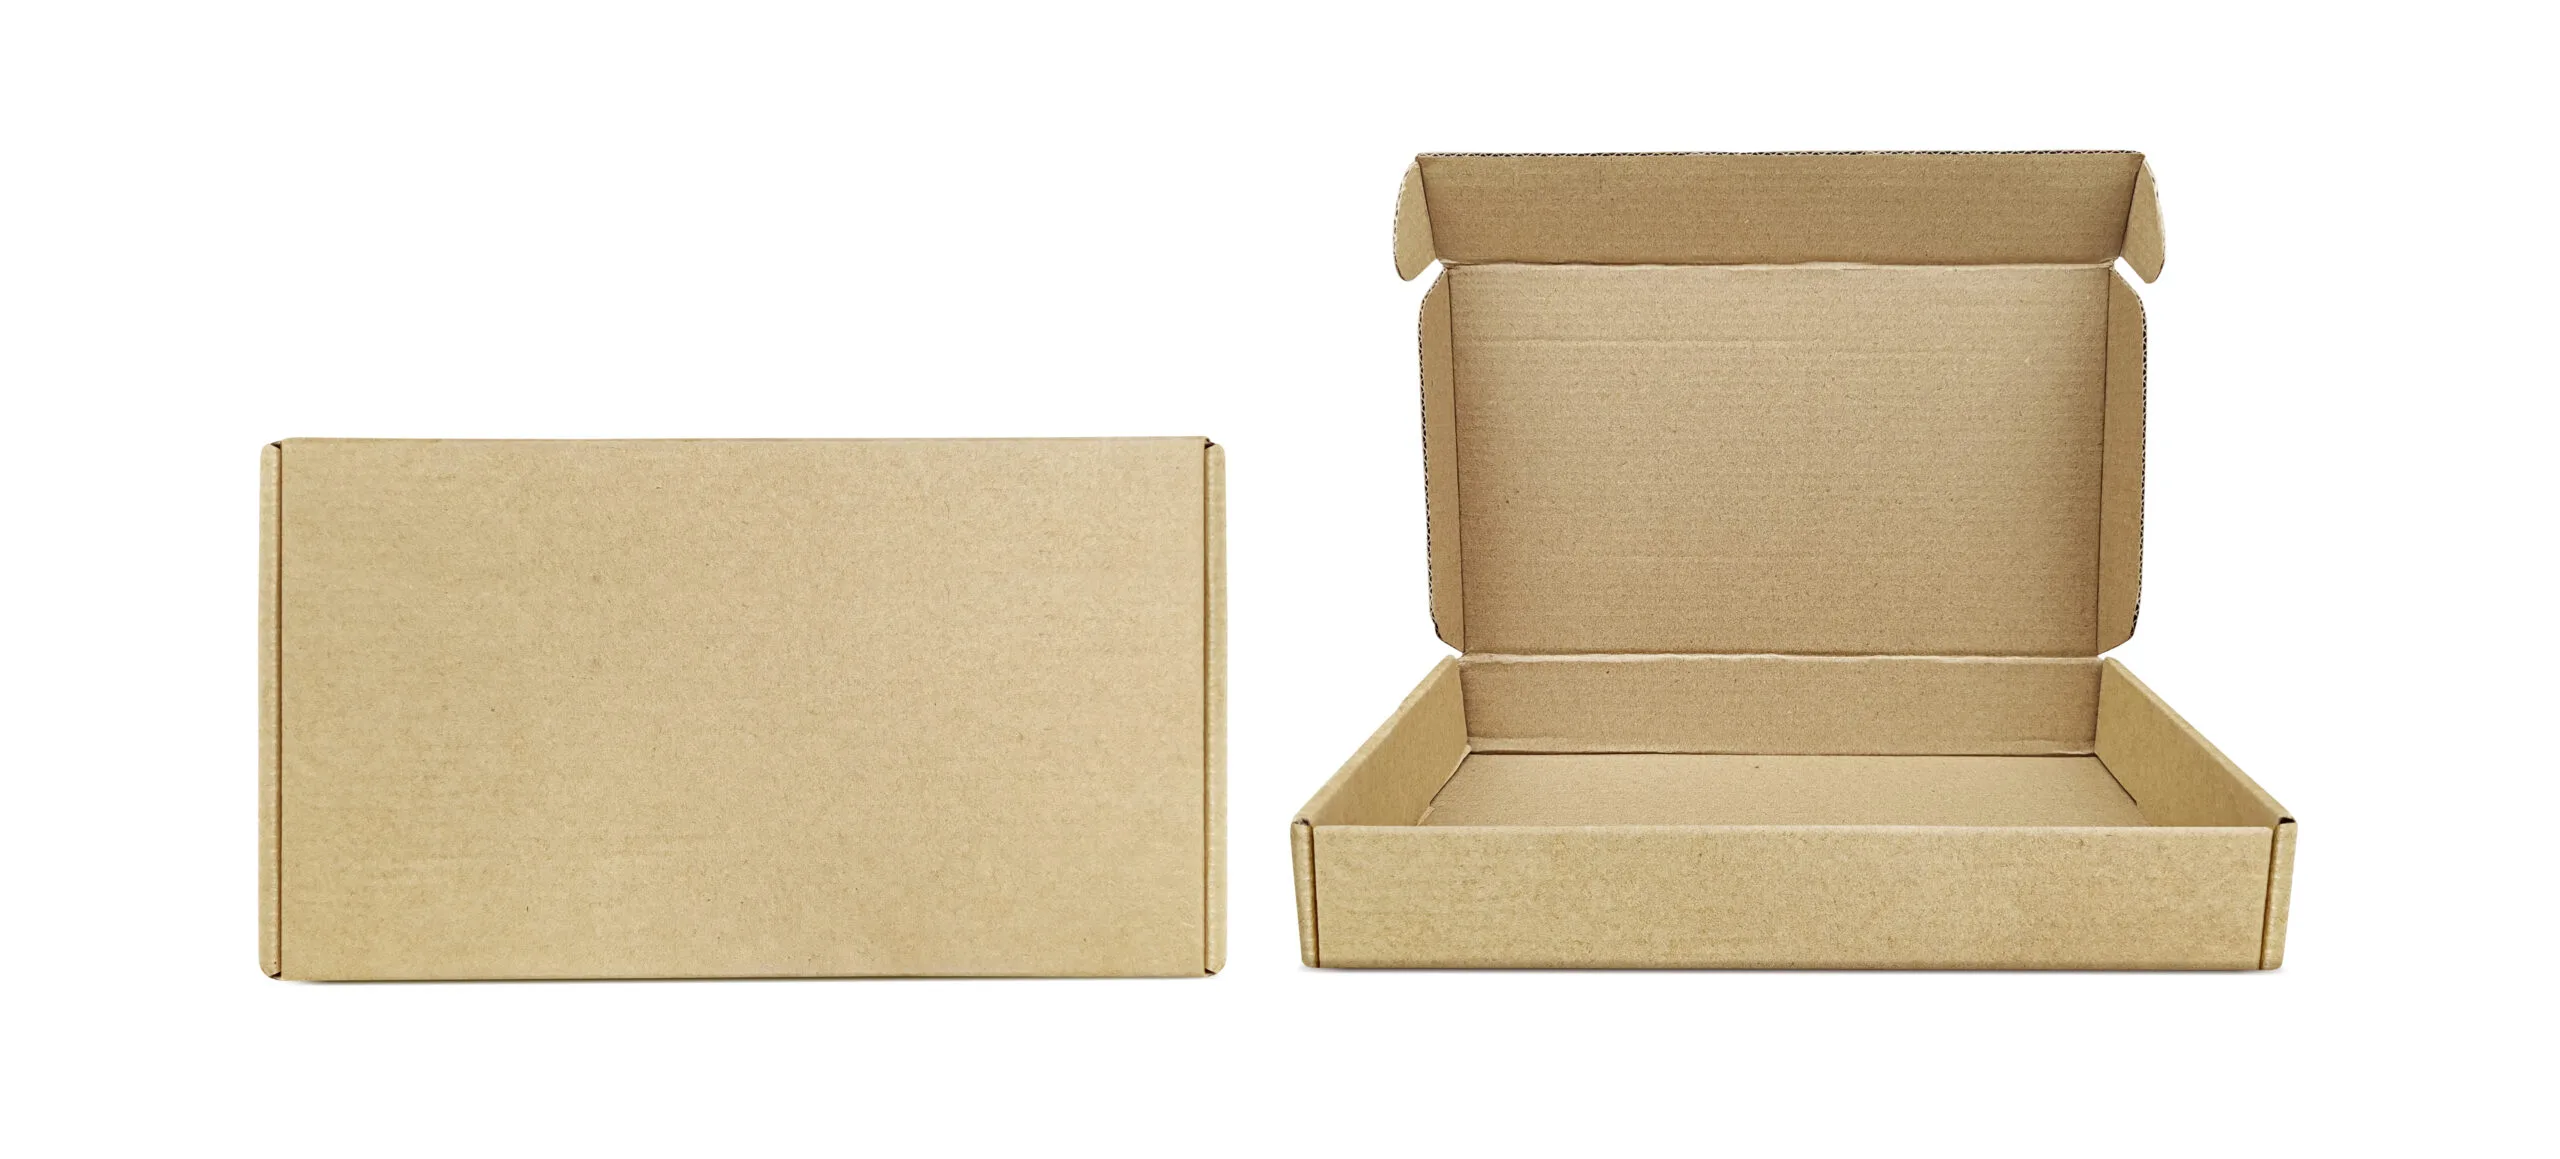 Boîtes en carton à rabat rentrant – 3 x 3 x 6 po, kraft S-7369 - Uline